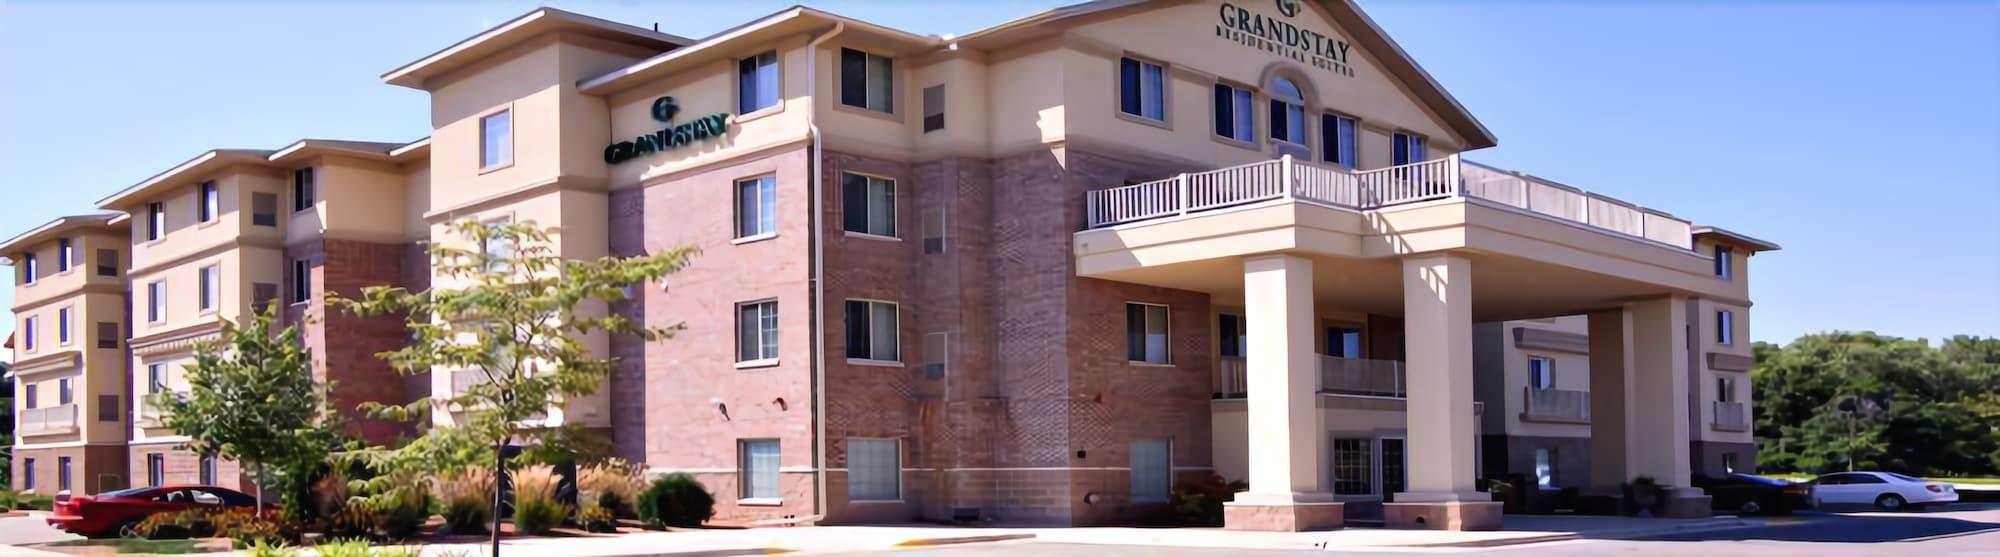 GrandStay Residential Suites Hotel